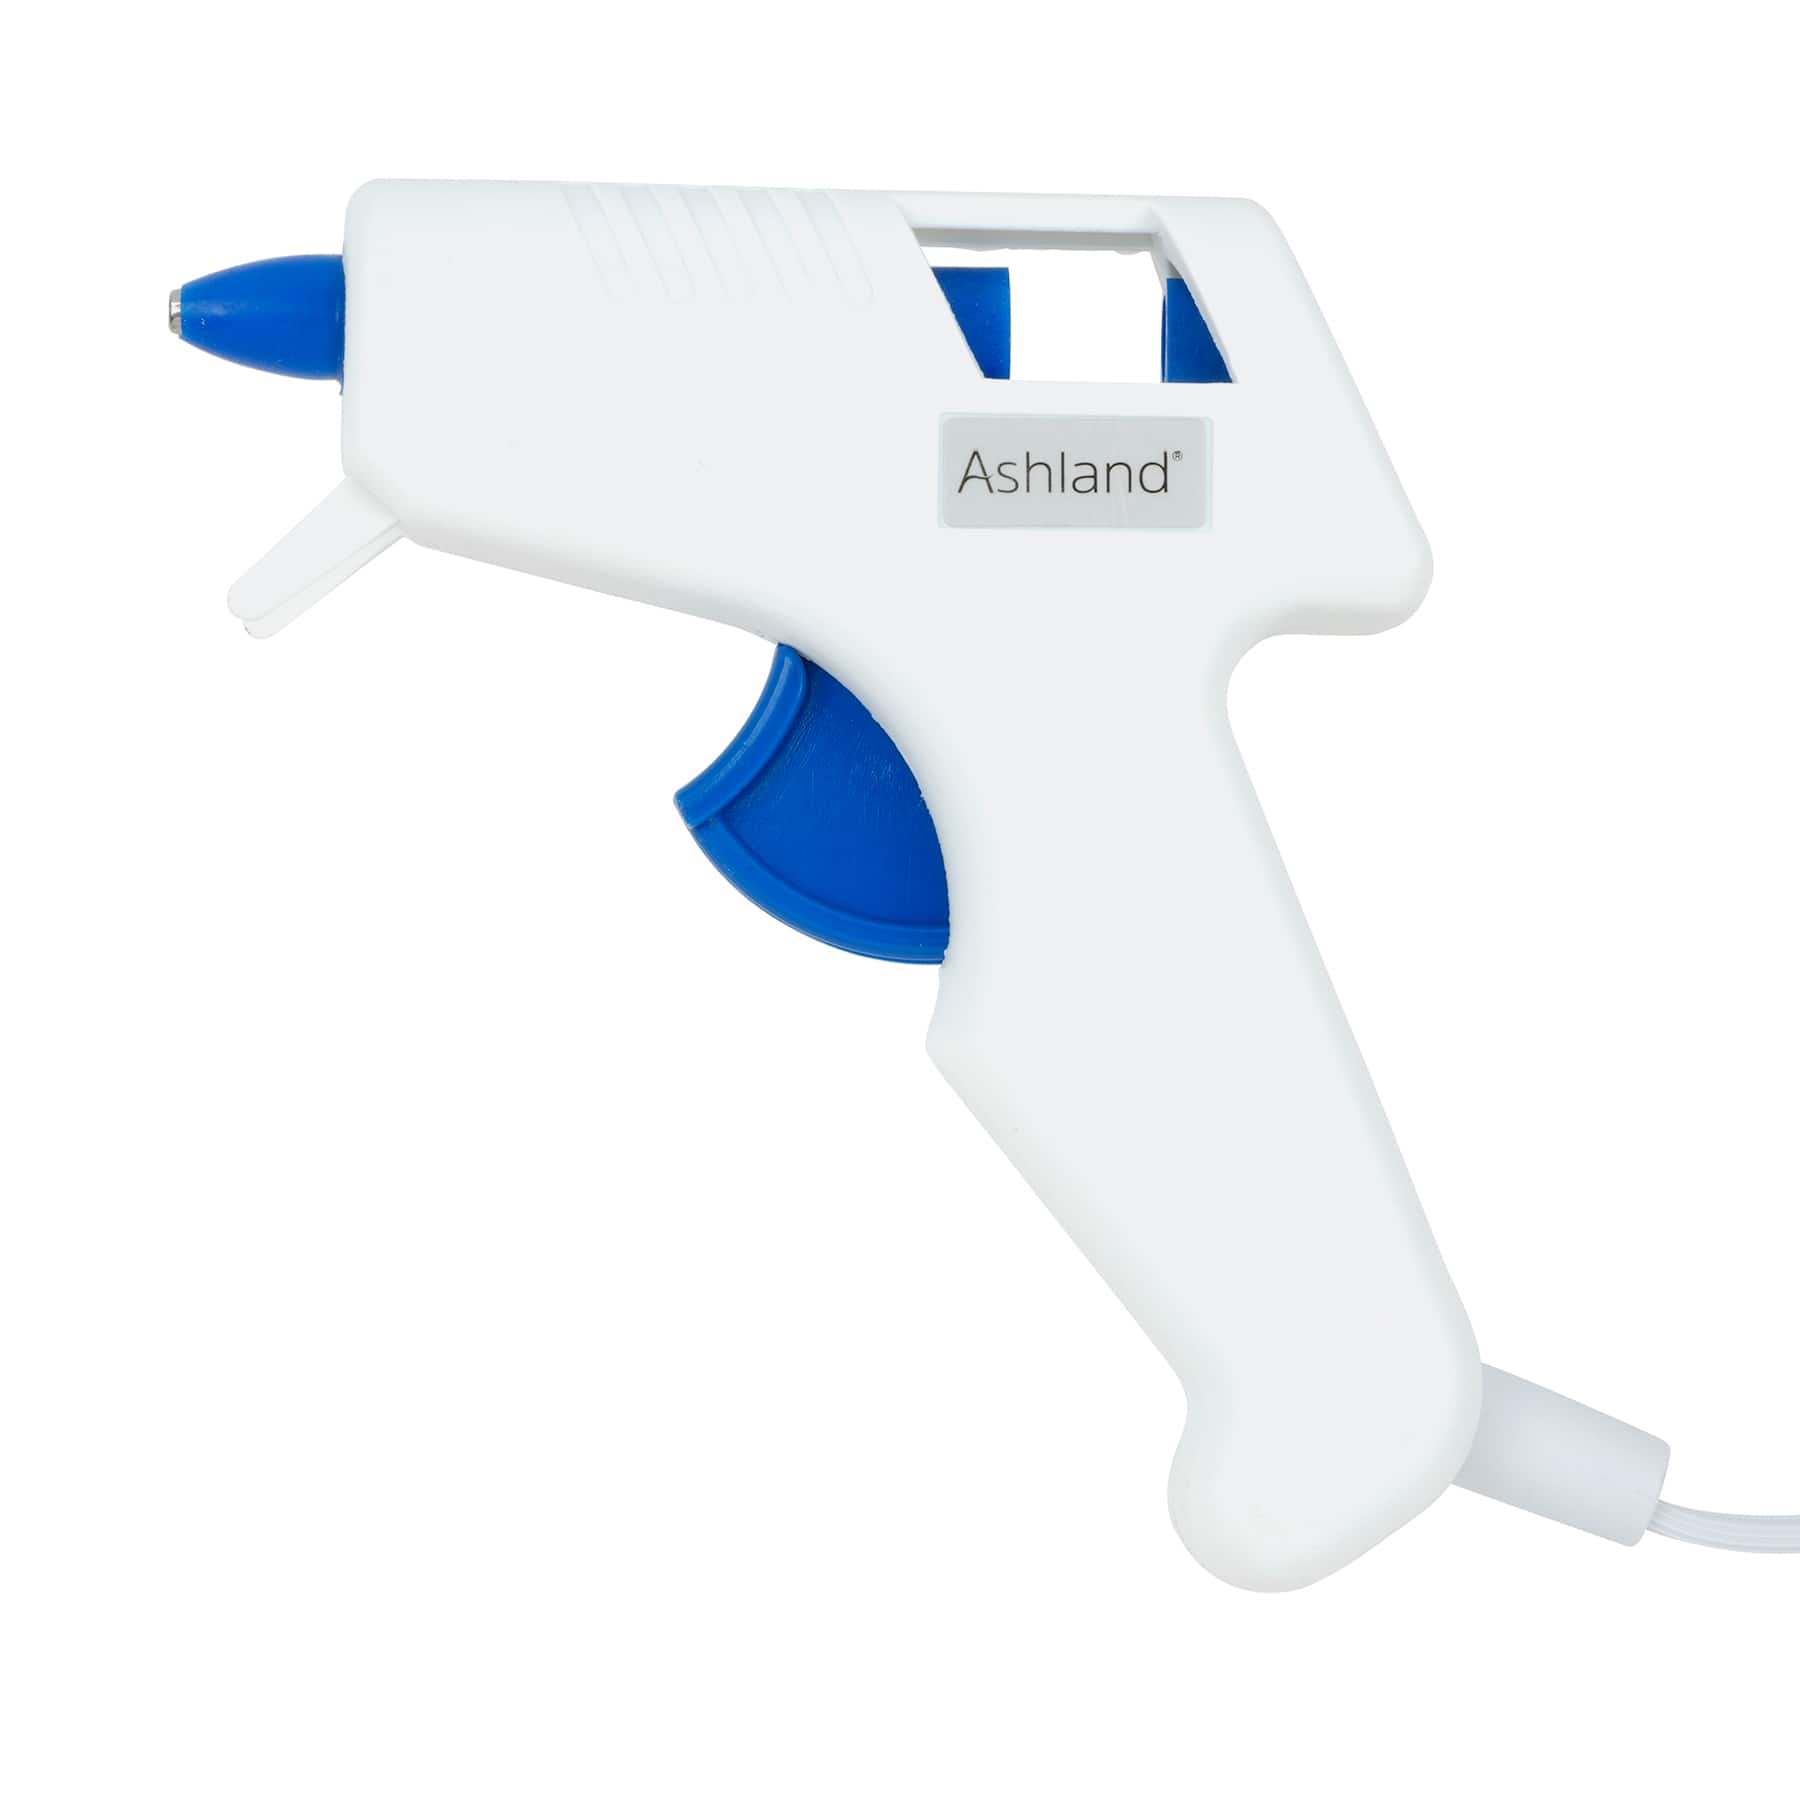 Mini Low Temperature Glue Gun by Ashland®